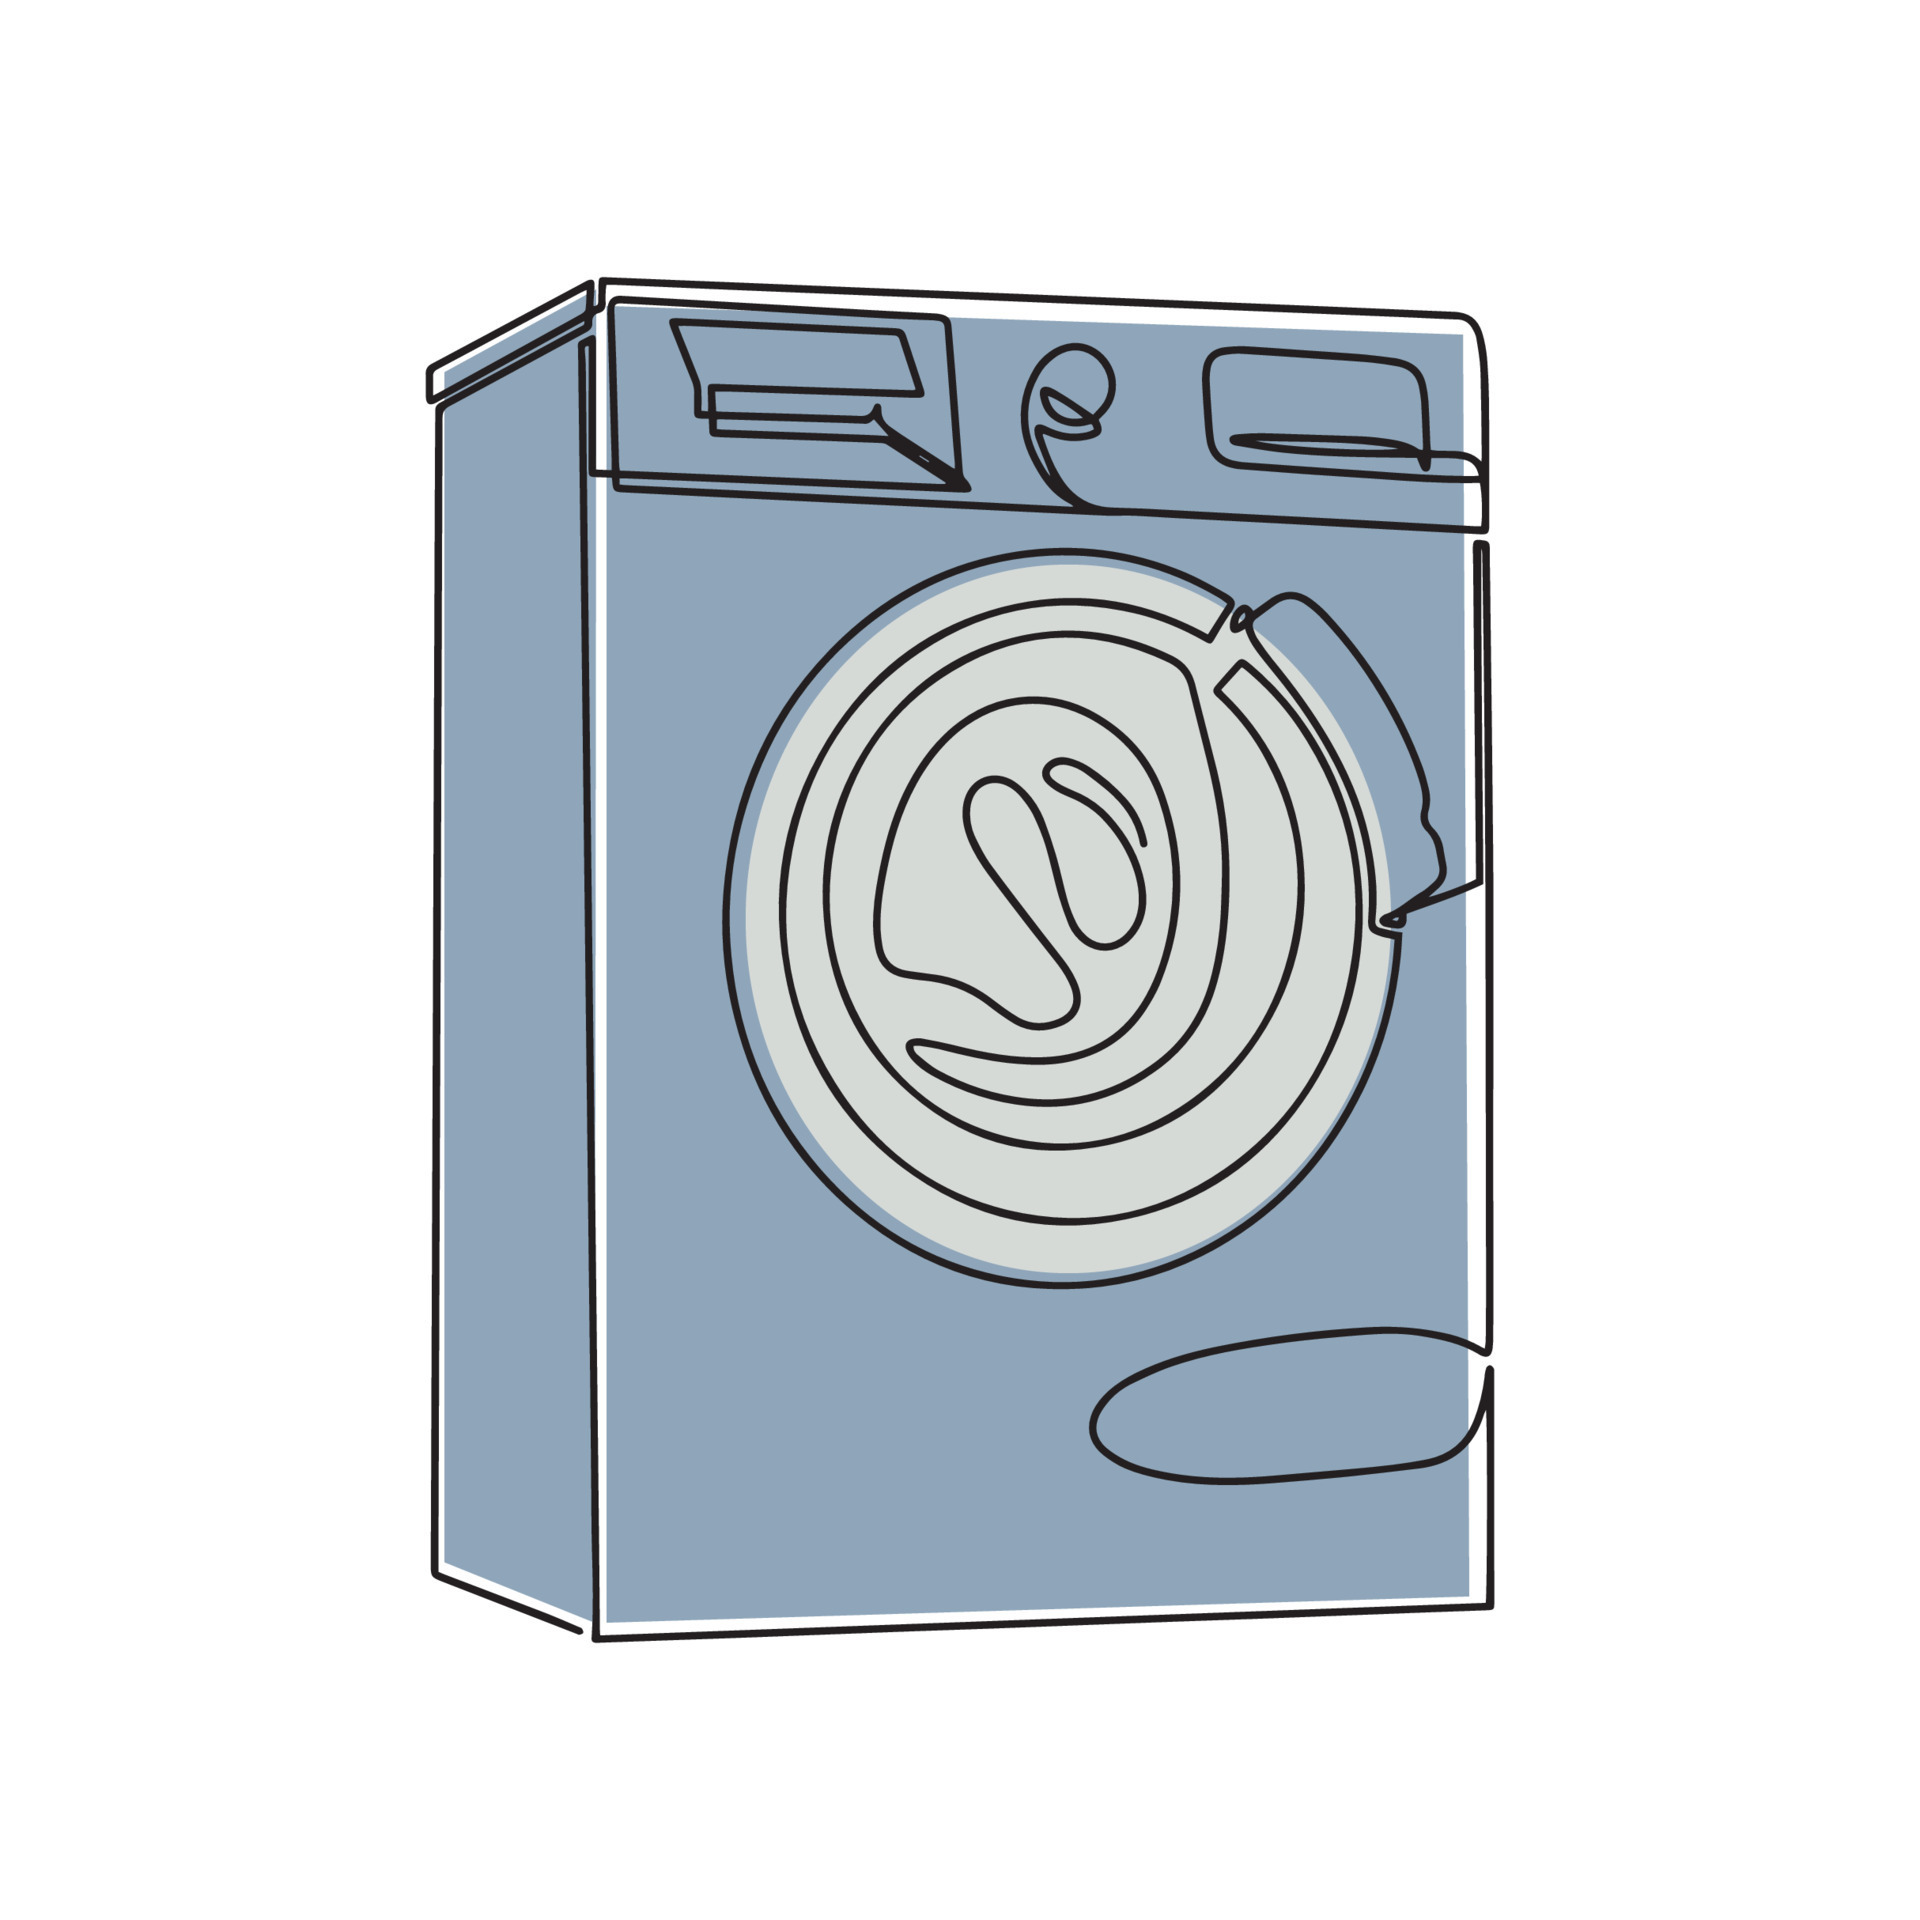 Washing machine 2d elevation block cad drawing details dwg file - Cadbull